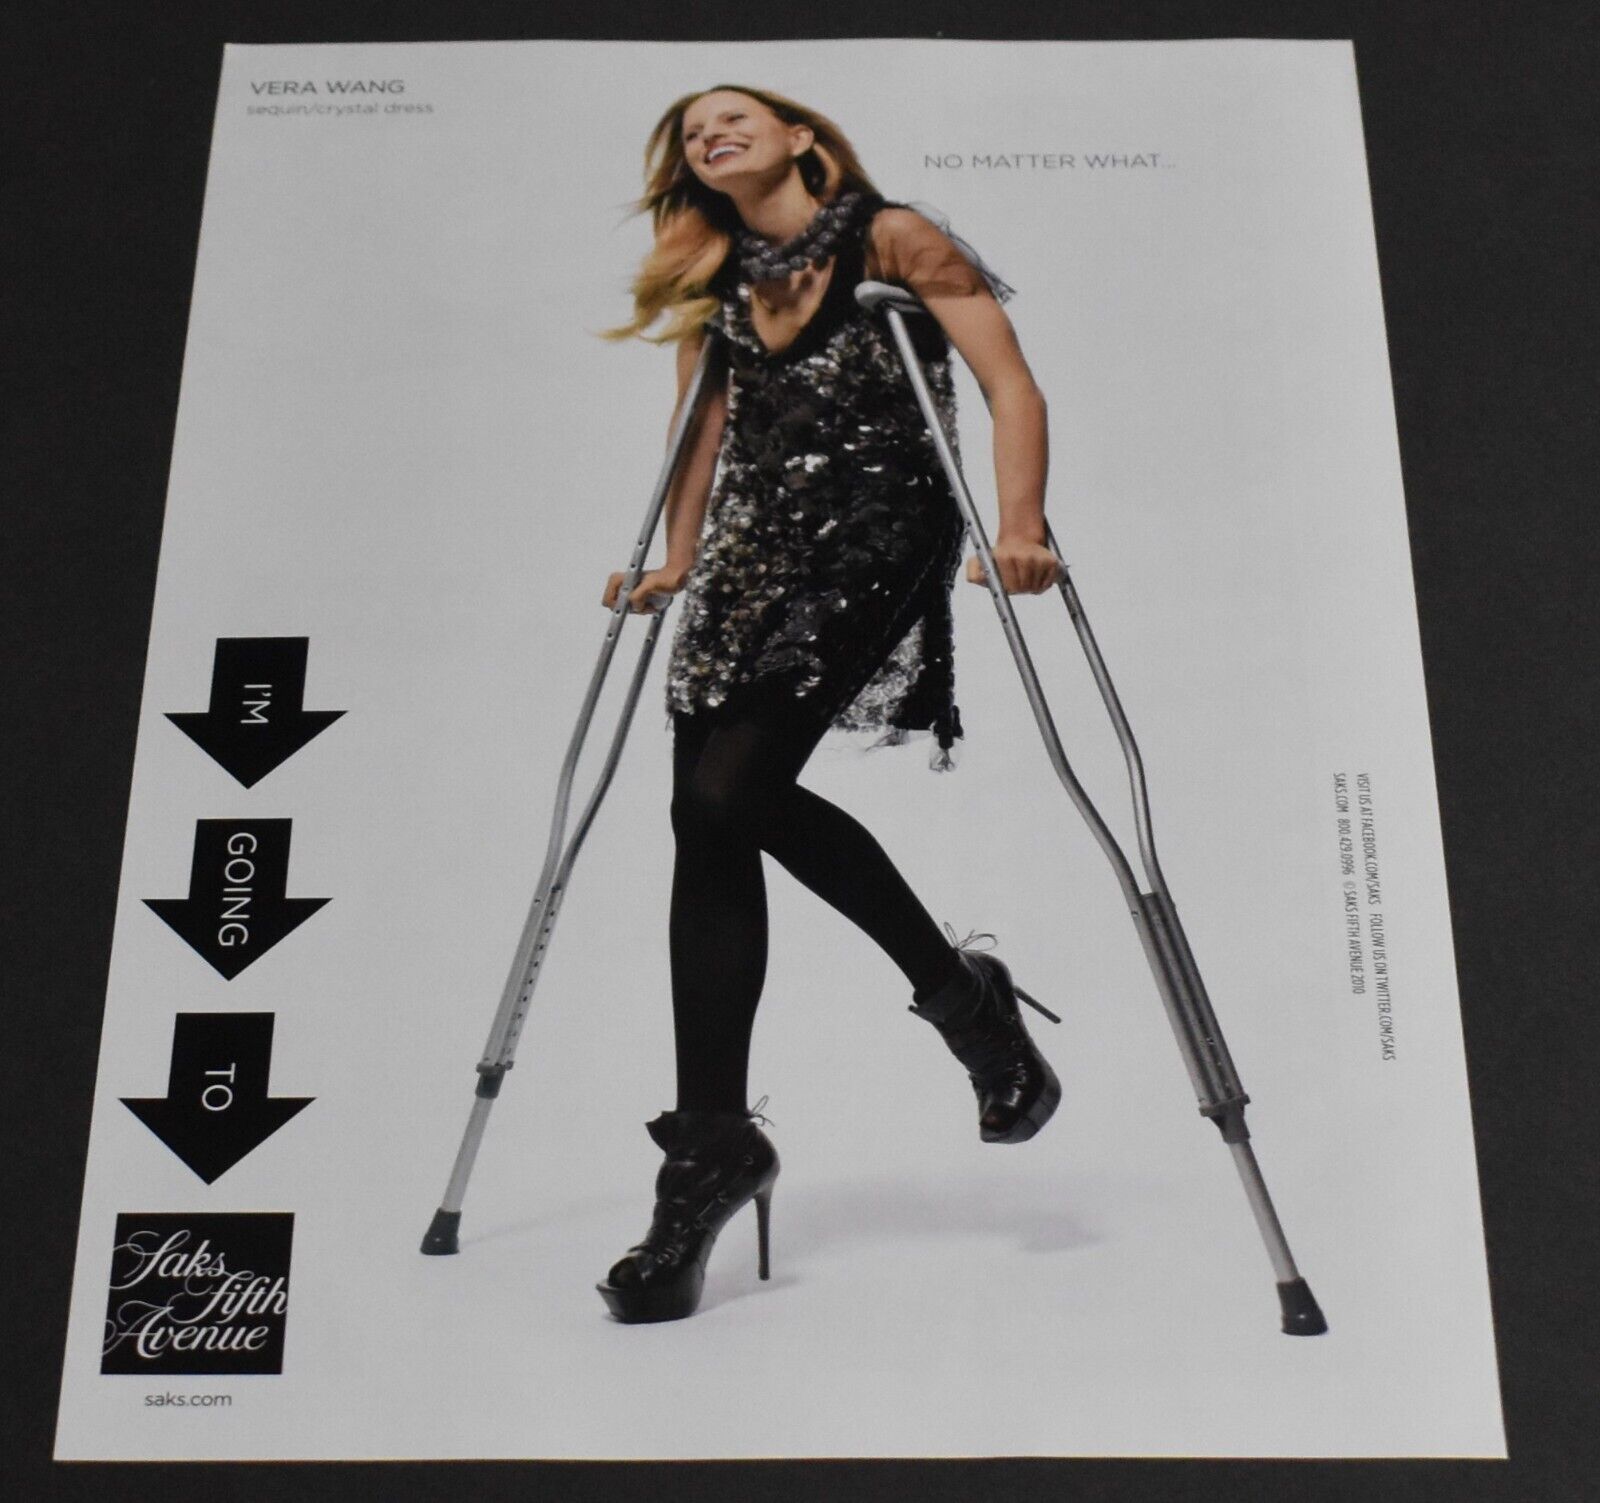 2010 Print Ad Sexy Heels Long Legs Lady Fashion Blonde Saks Fifth Avenue Art